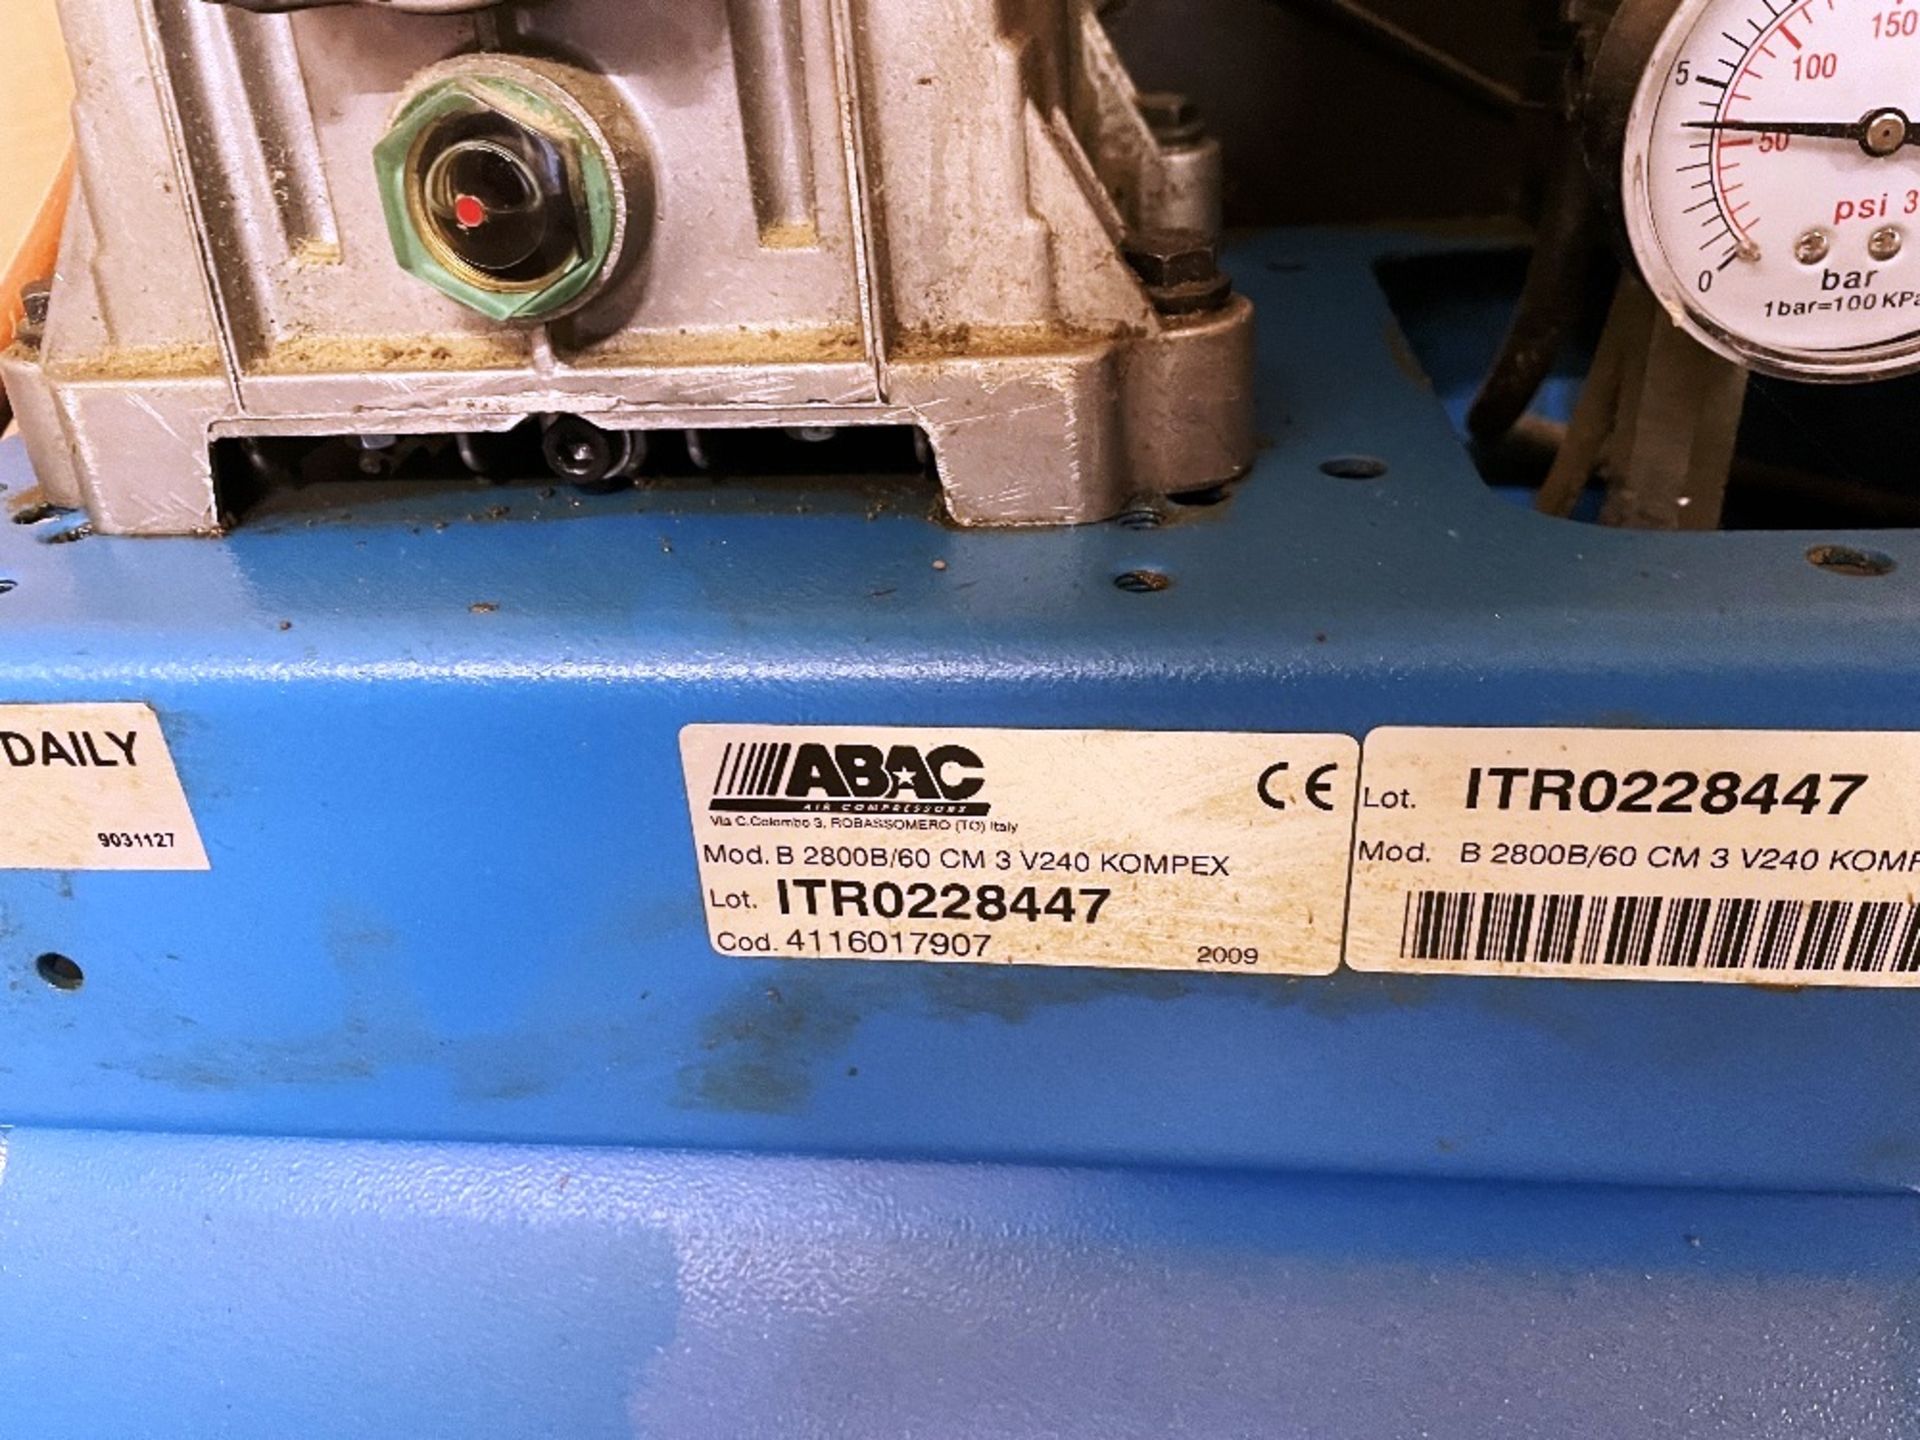 ABAC B2800B/60 Cm3 V240 Kompex Air Compressor 240V - Requires Attention - Image 2 of 2